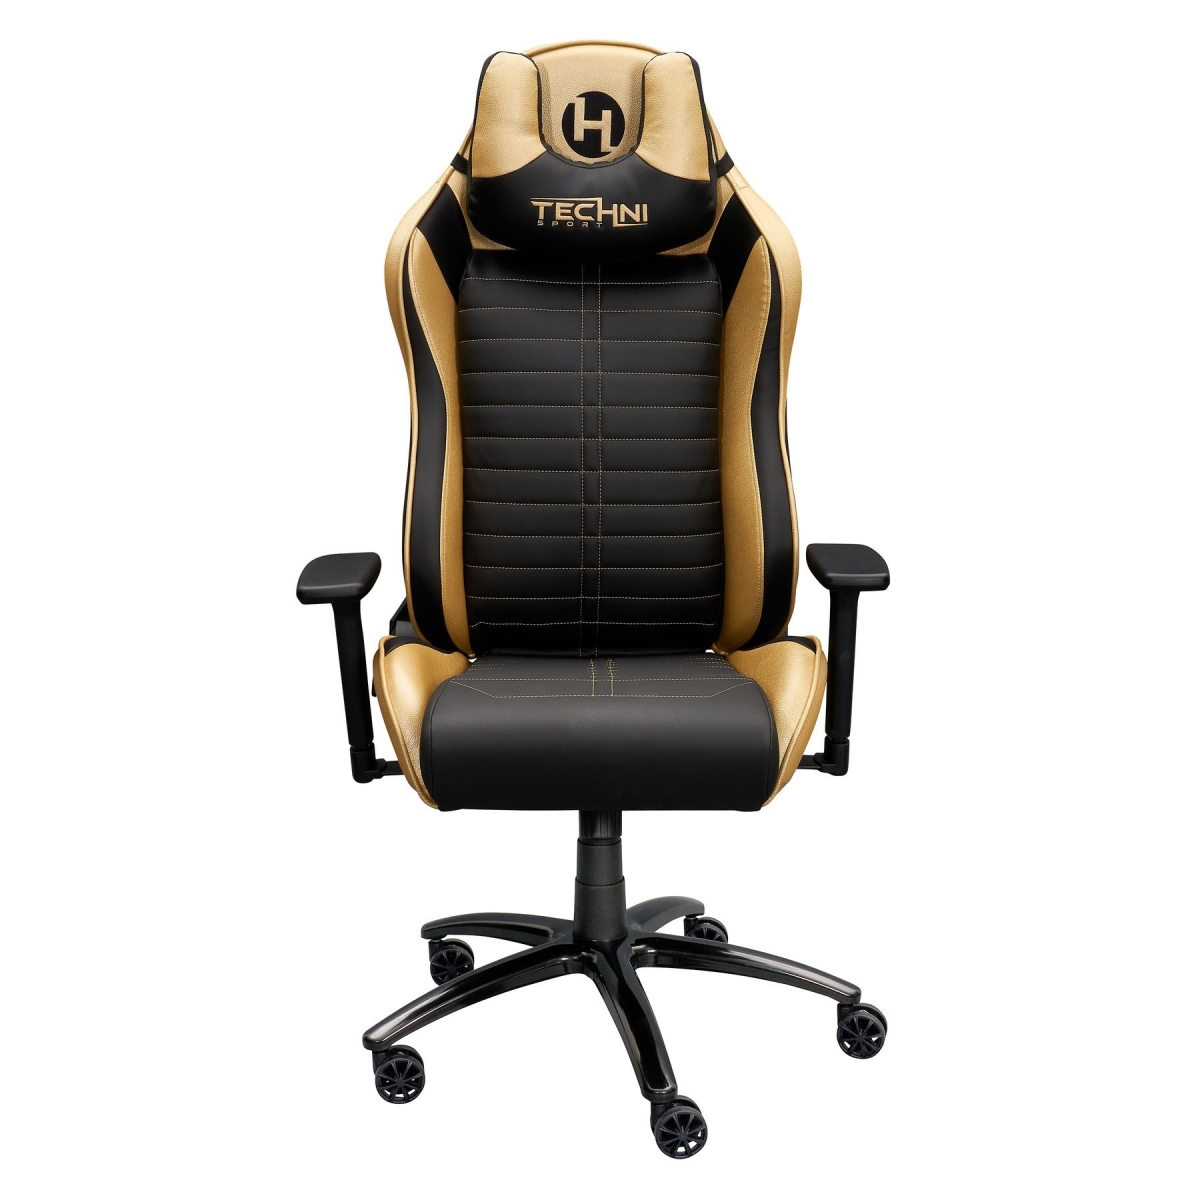 Rta-ts62c-gld Ergonomic Racing Style Gaming Chair, Golden